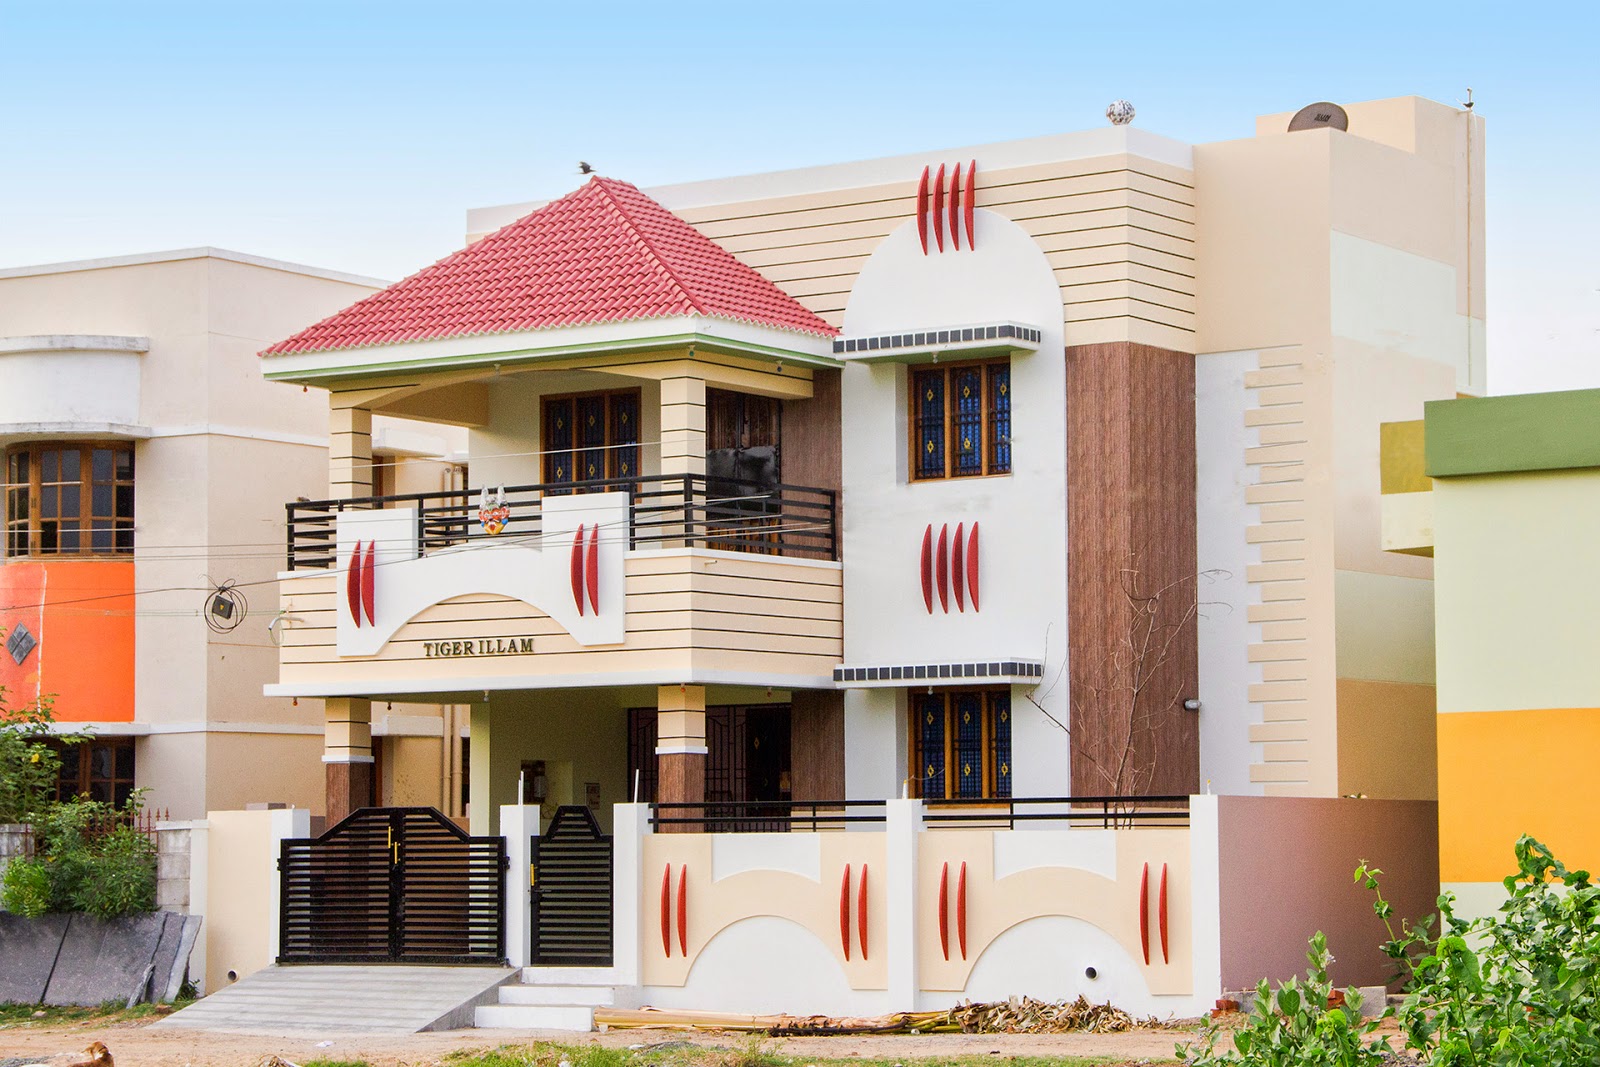  India  villa elevation  in 3440 sq feet Kerala home  design  